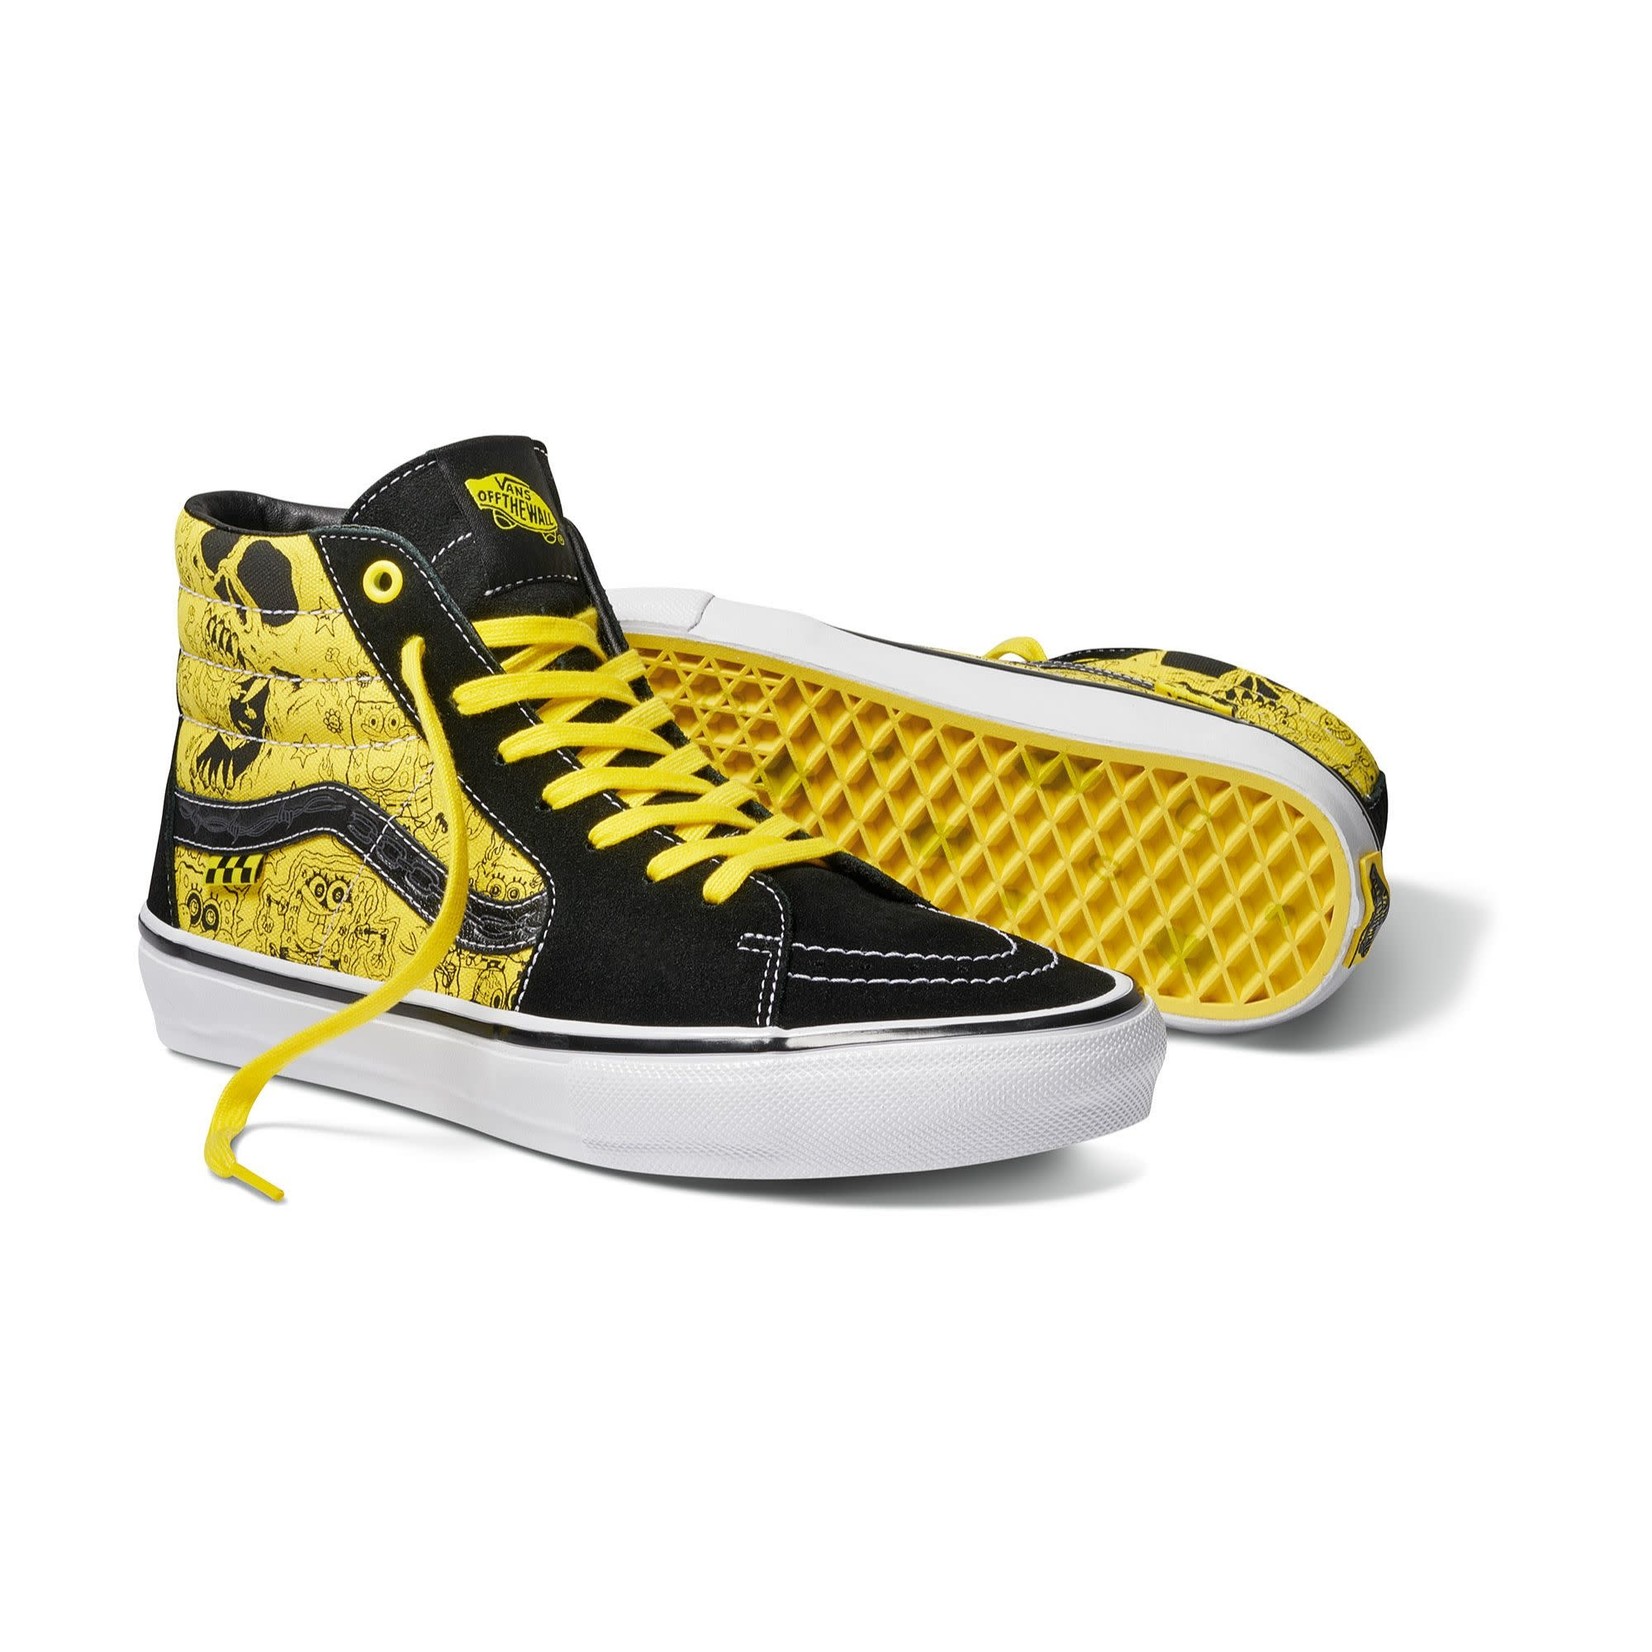 Spongebob Sk8-Hi Skate Shoes - Yellow - - Attic Skate & Snow Shop